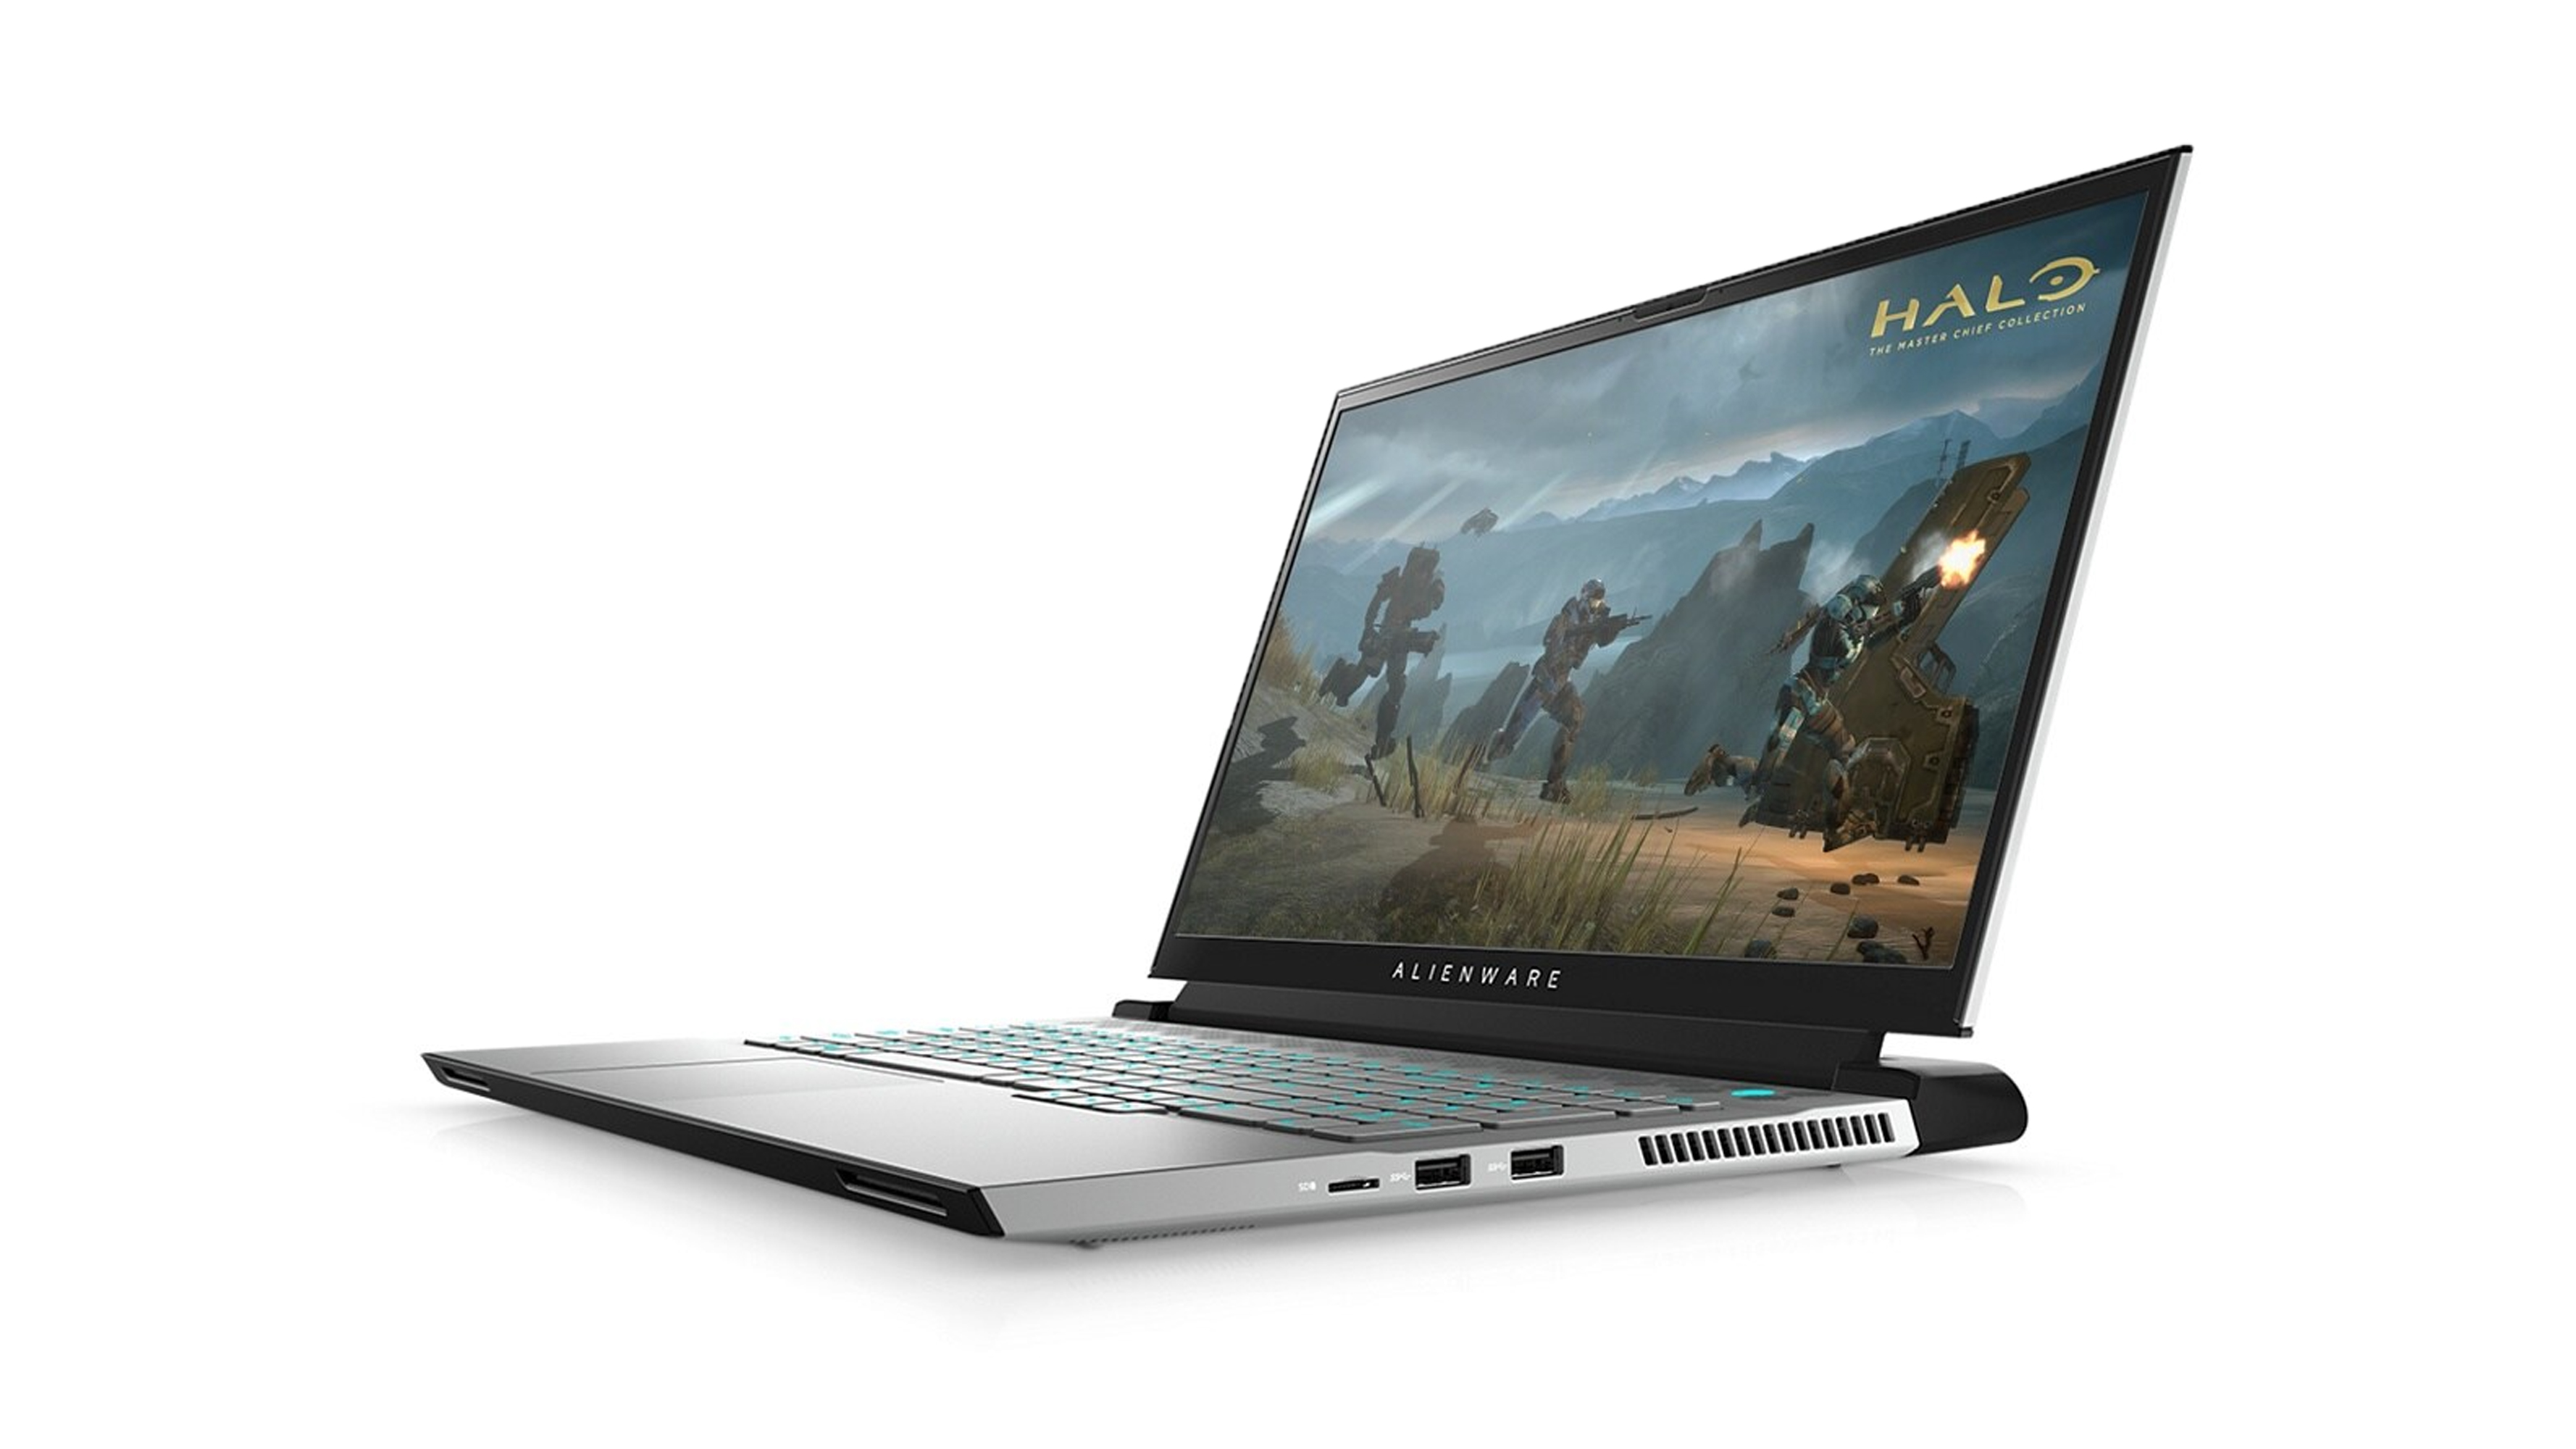 Best gaming laptops: Alienware m17 R4 (2021)